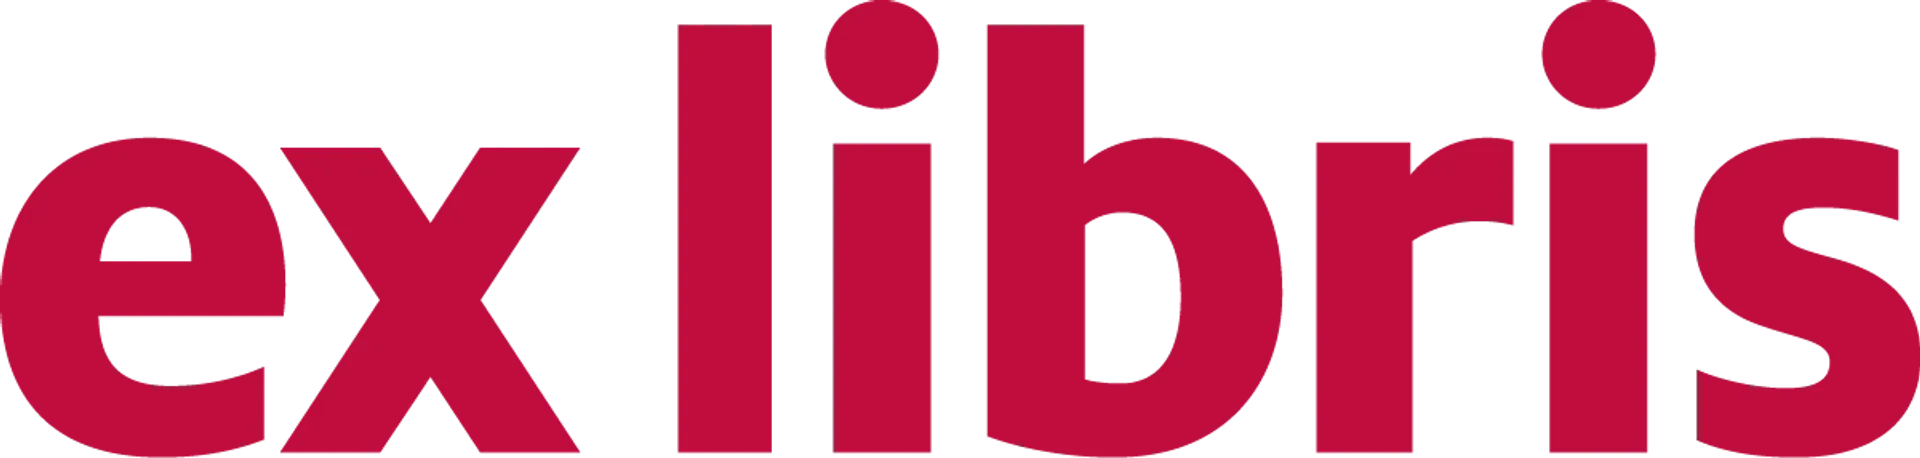 EX LIBRIS logo